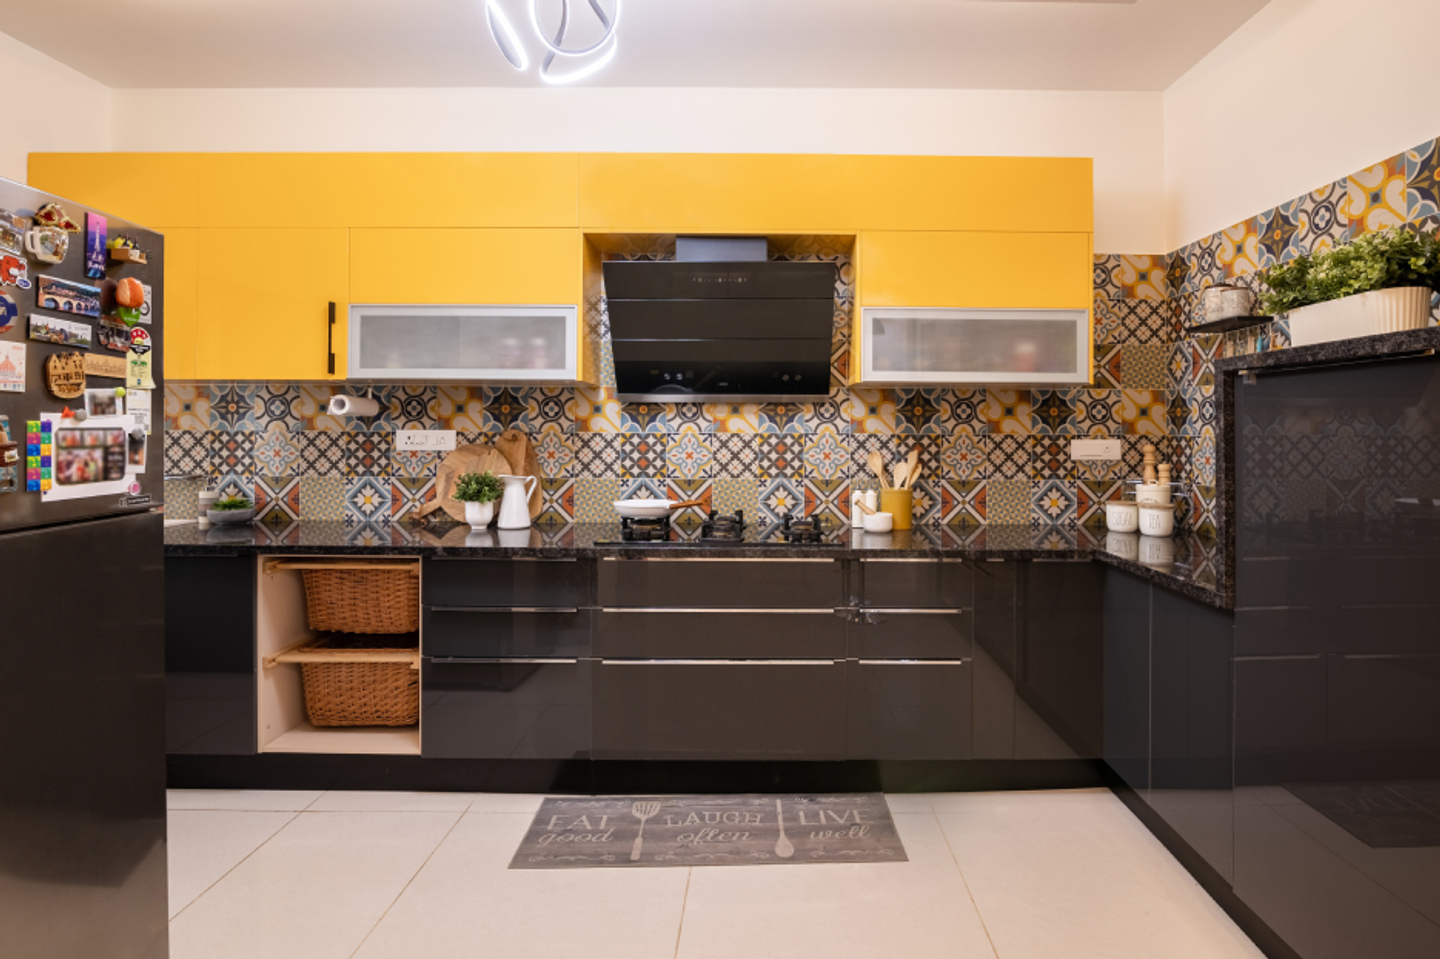 Classic Modular L-Shaped Kitchen Cabinet Design With Yellow Loft Units